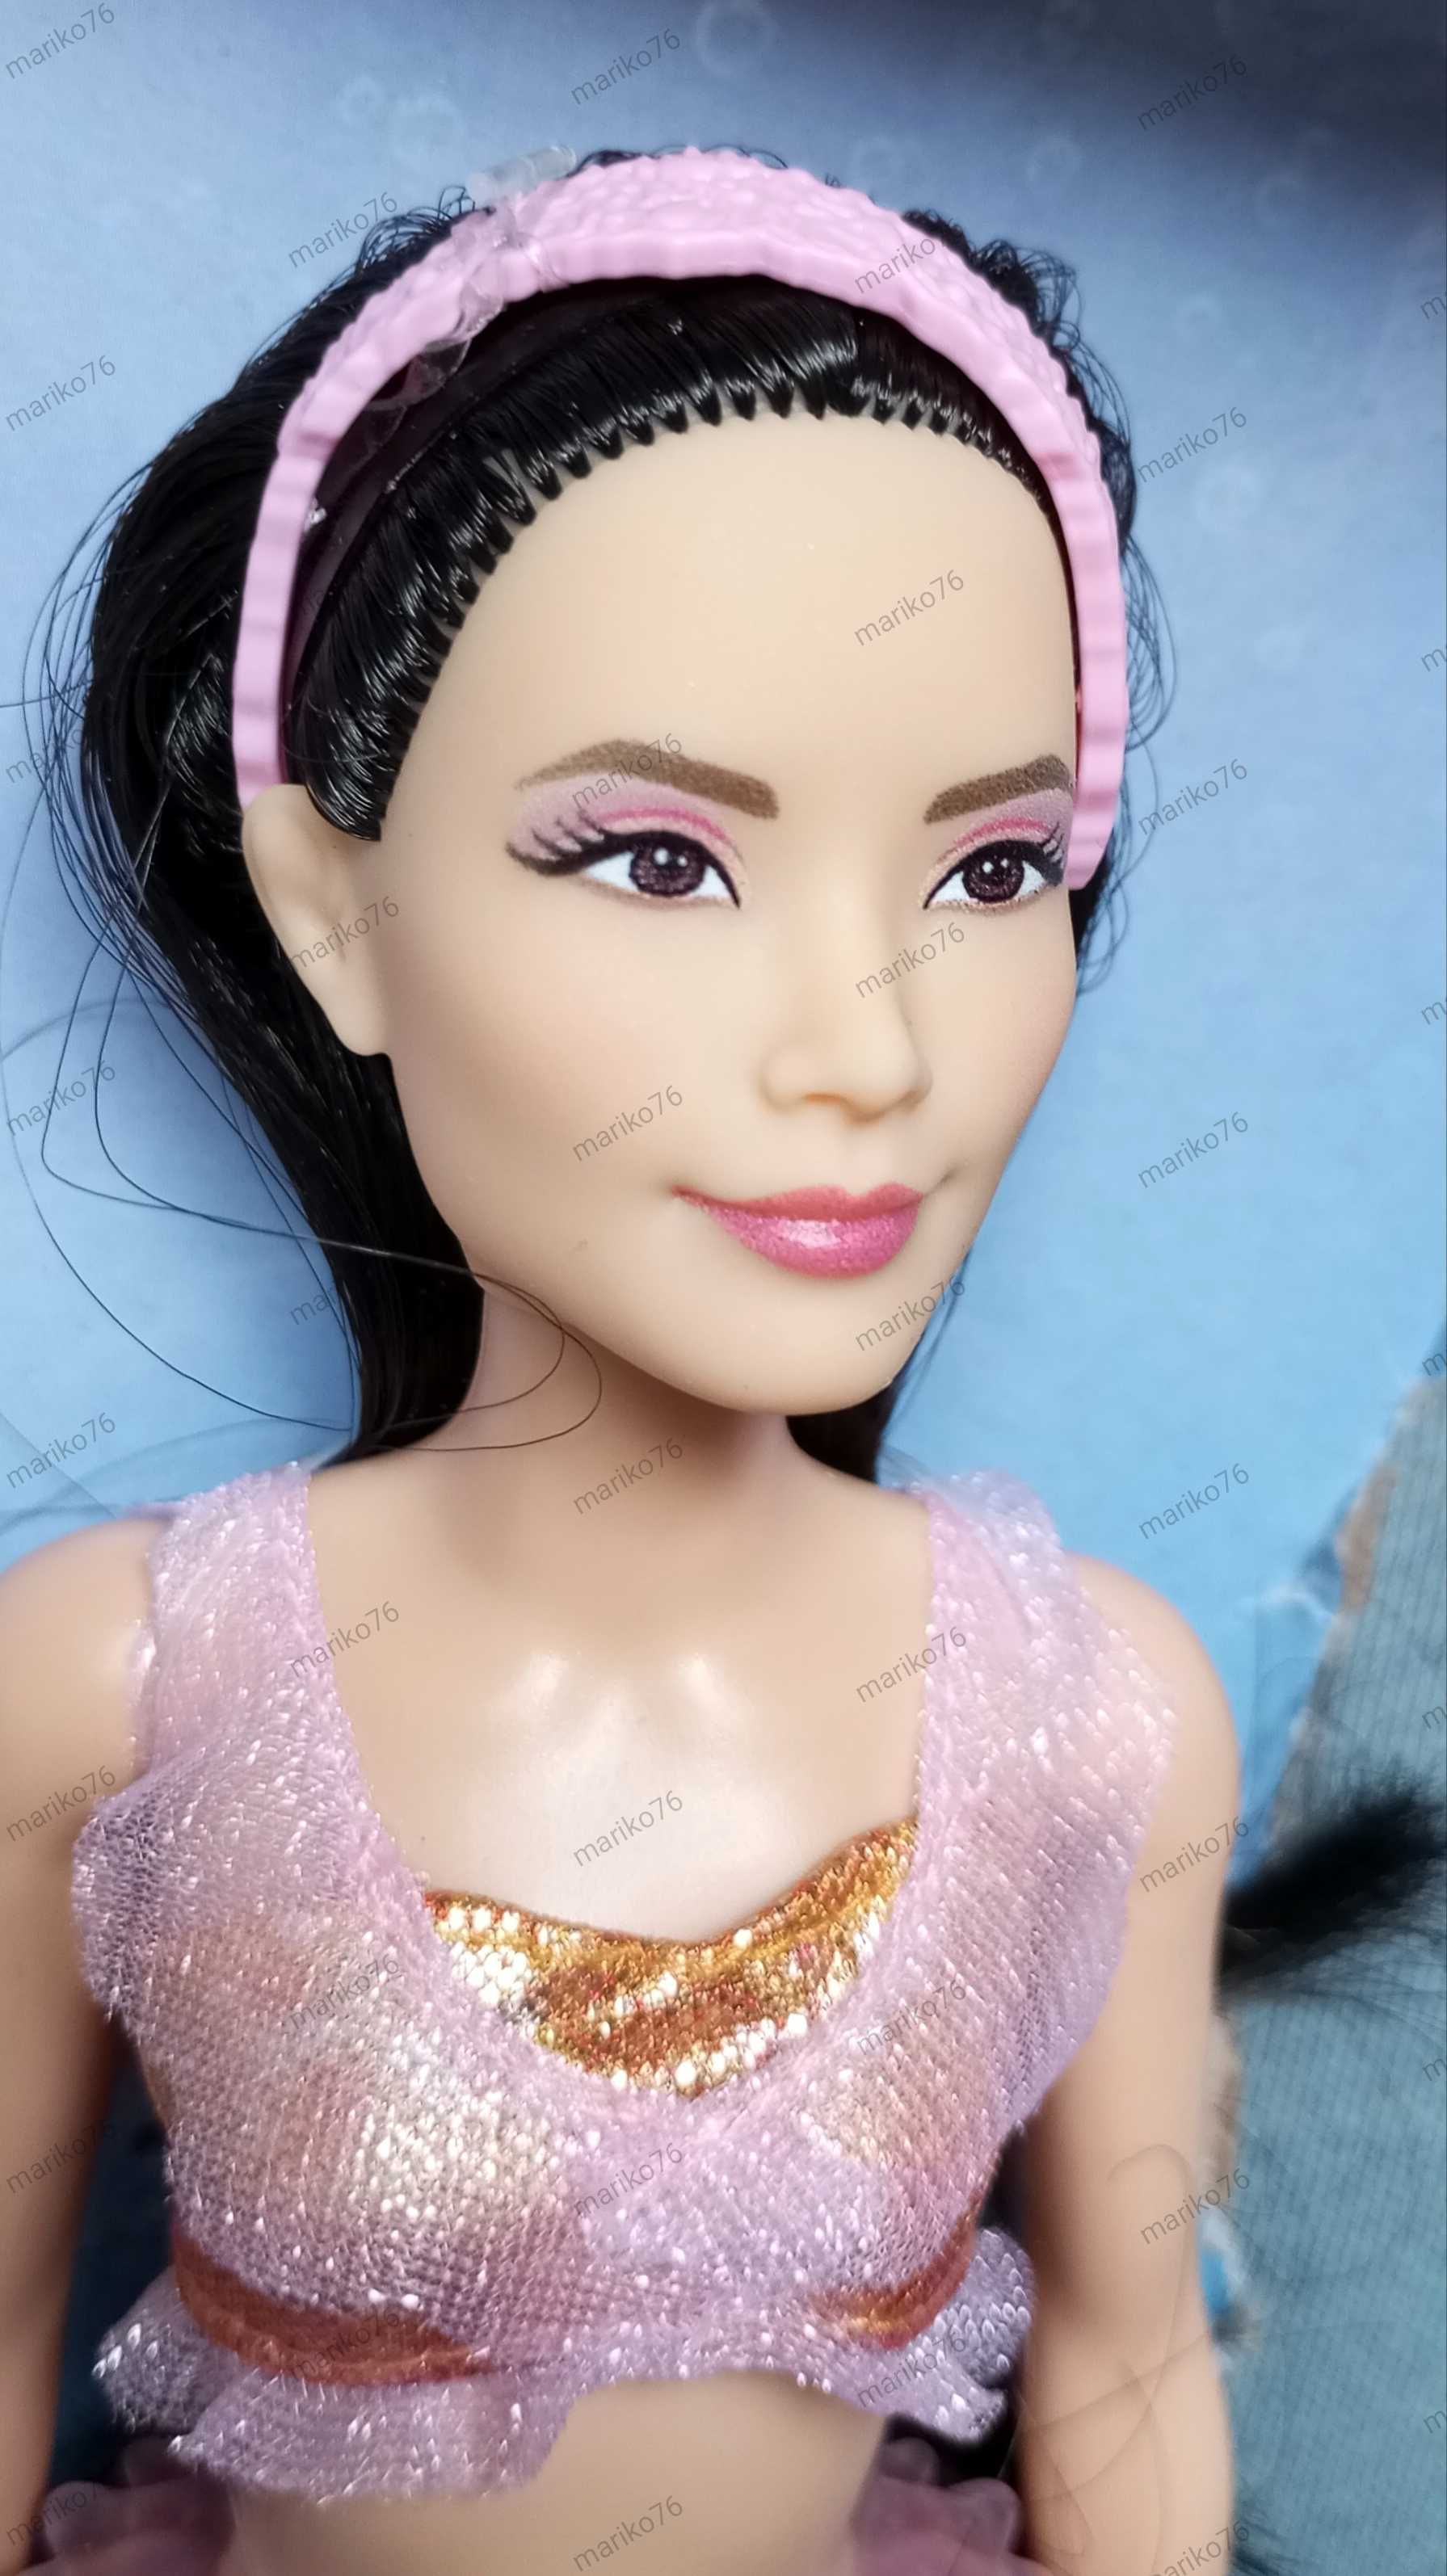 Lalka Barbie/Disney Mala "Mała syrenka" siostry